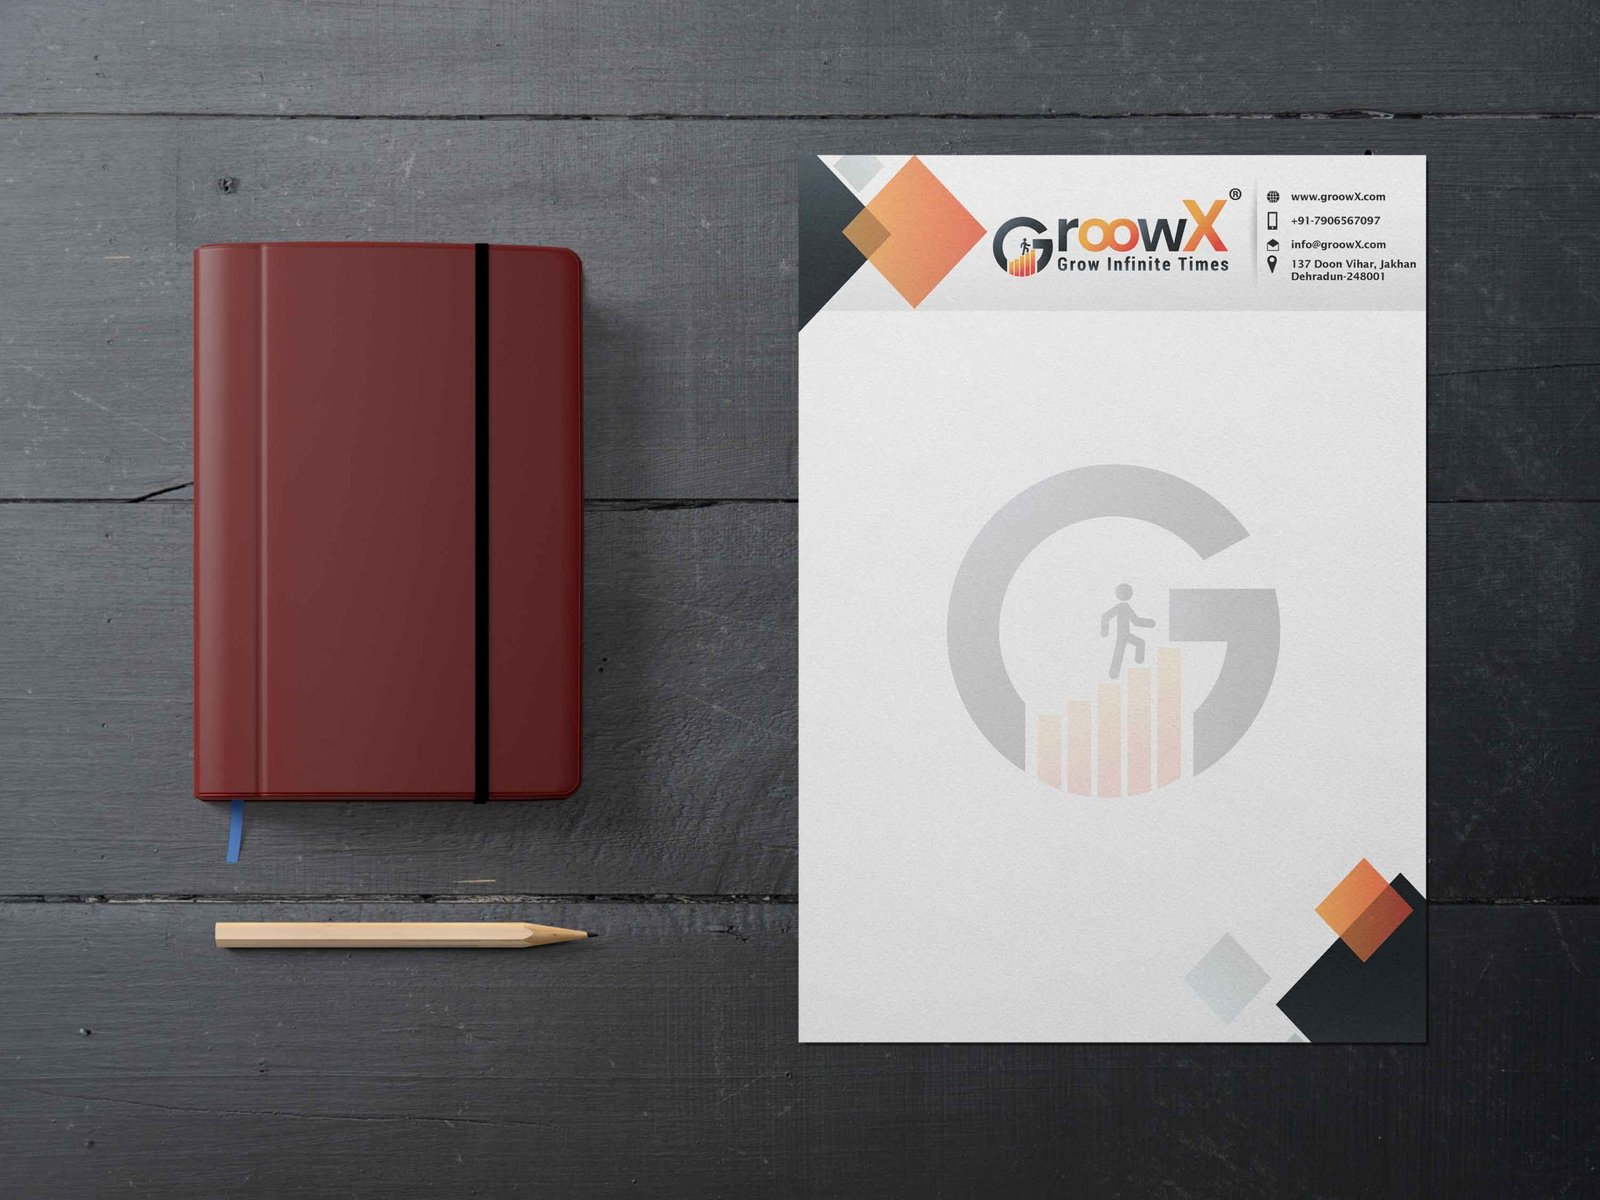 groowx company corporate letterhead design by Badri design